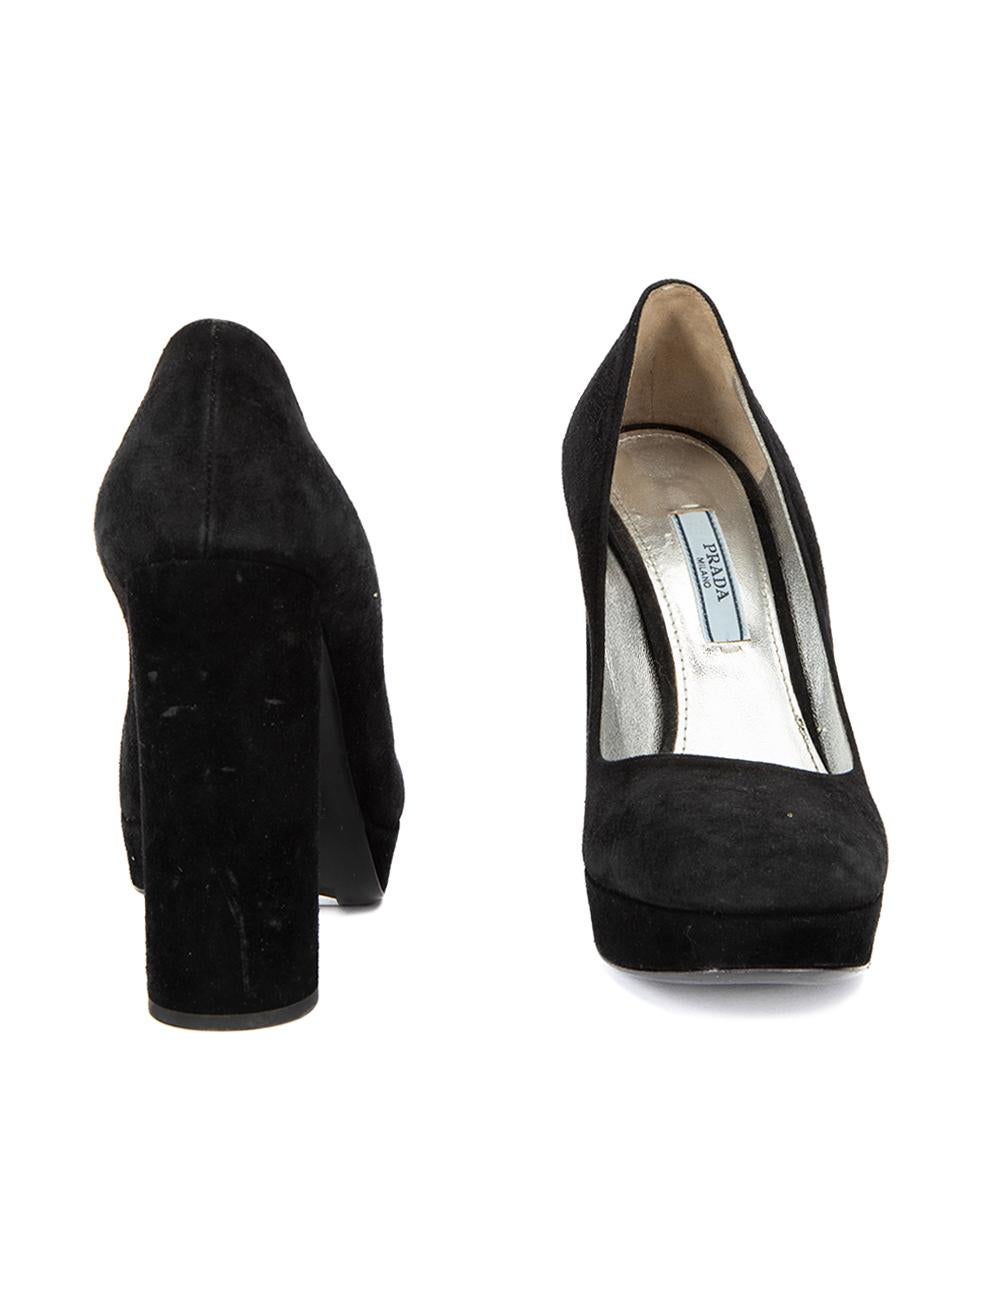 Prada Women's Black Suede Round Toe Platform Heels In Good Condition For Sale In London, GB